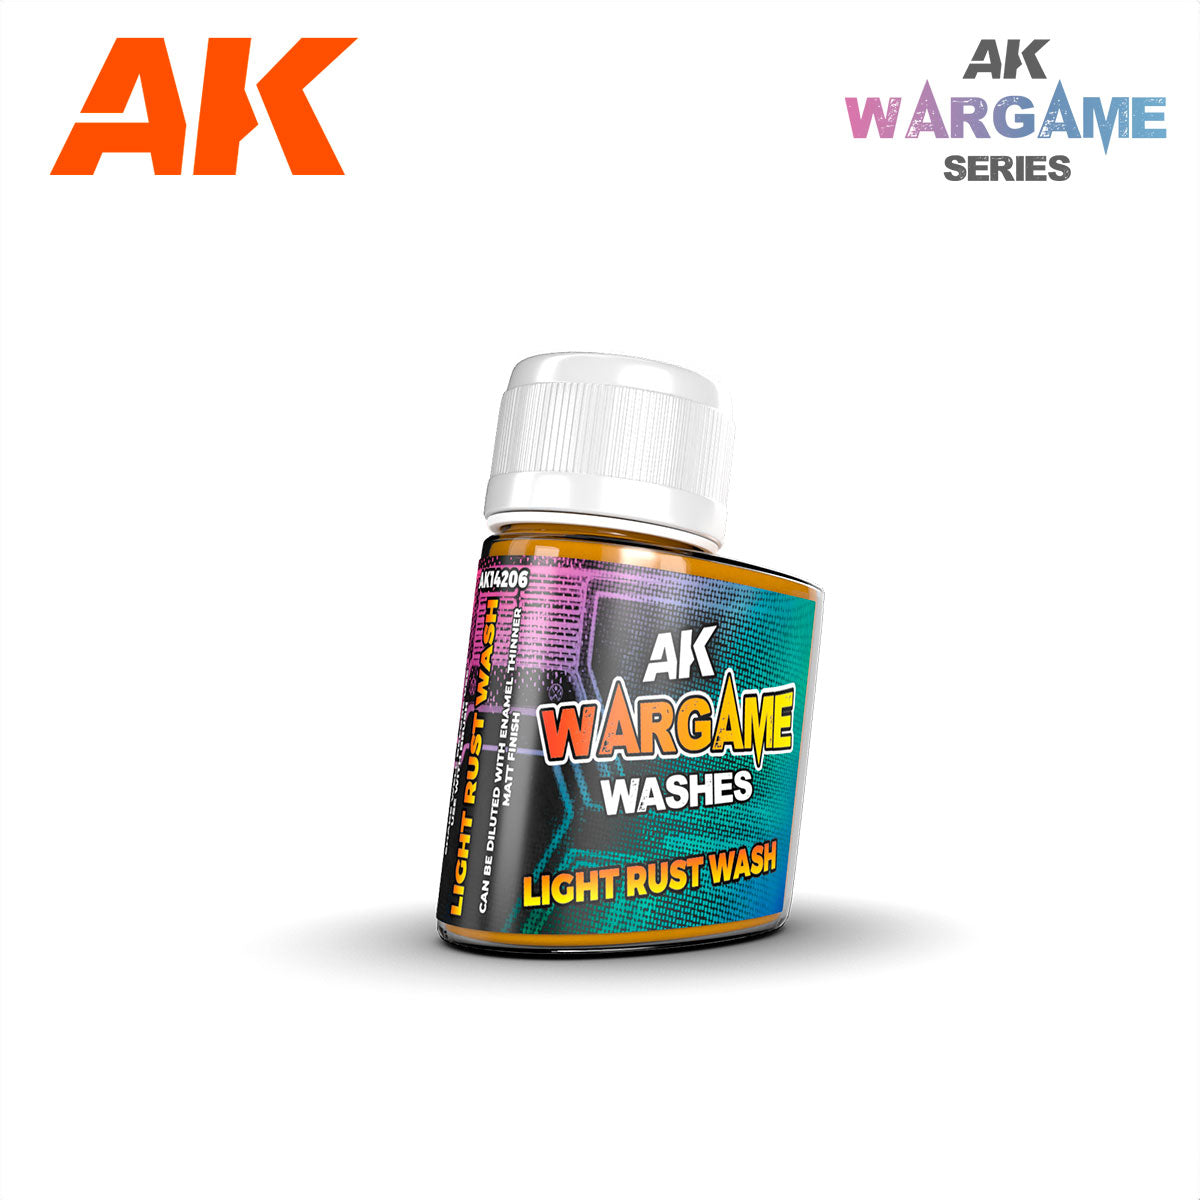 AK14206 - Light Rust wash (35ml) - Wargame Wash